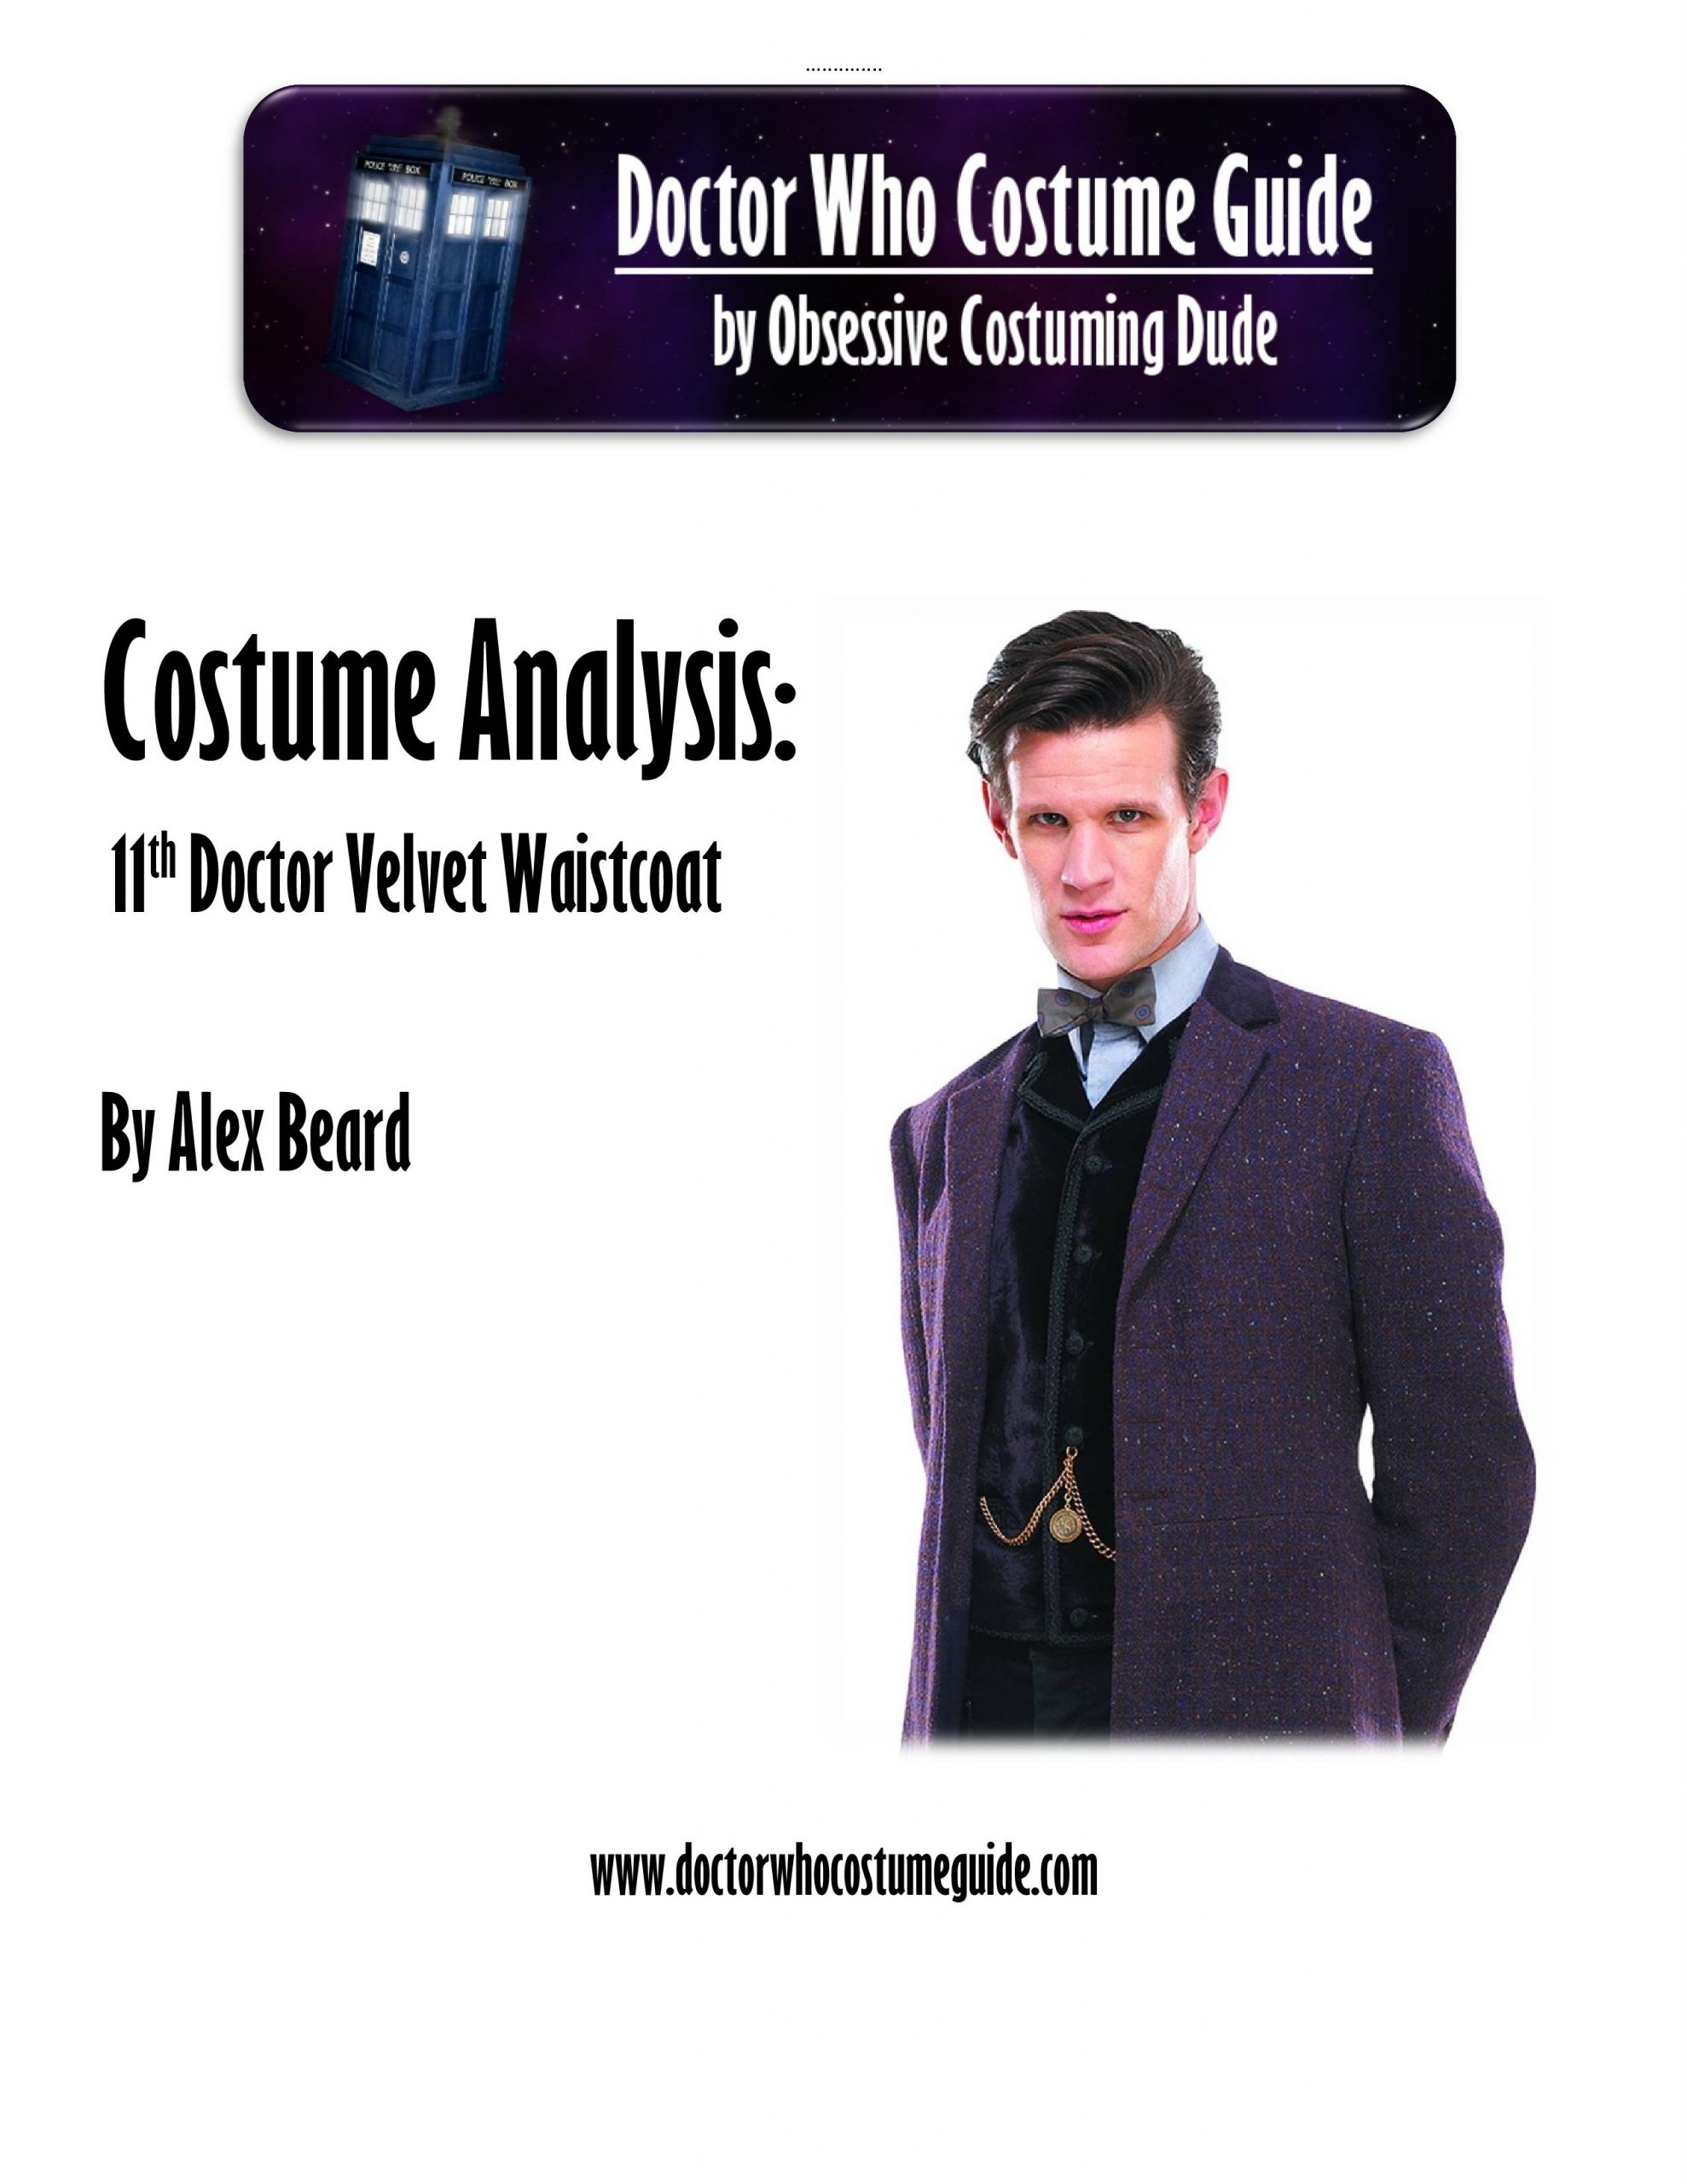 11th Doctor velvet waistcoat costume analysis - Doctor Who Costume Guide